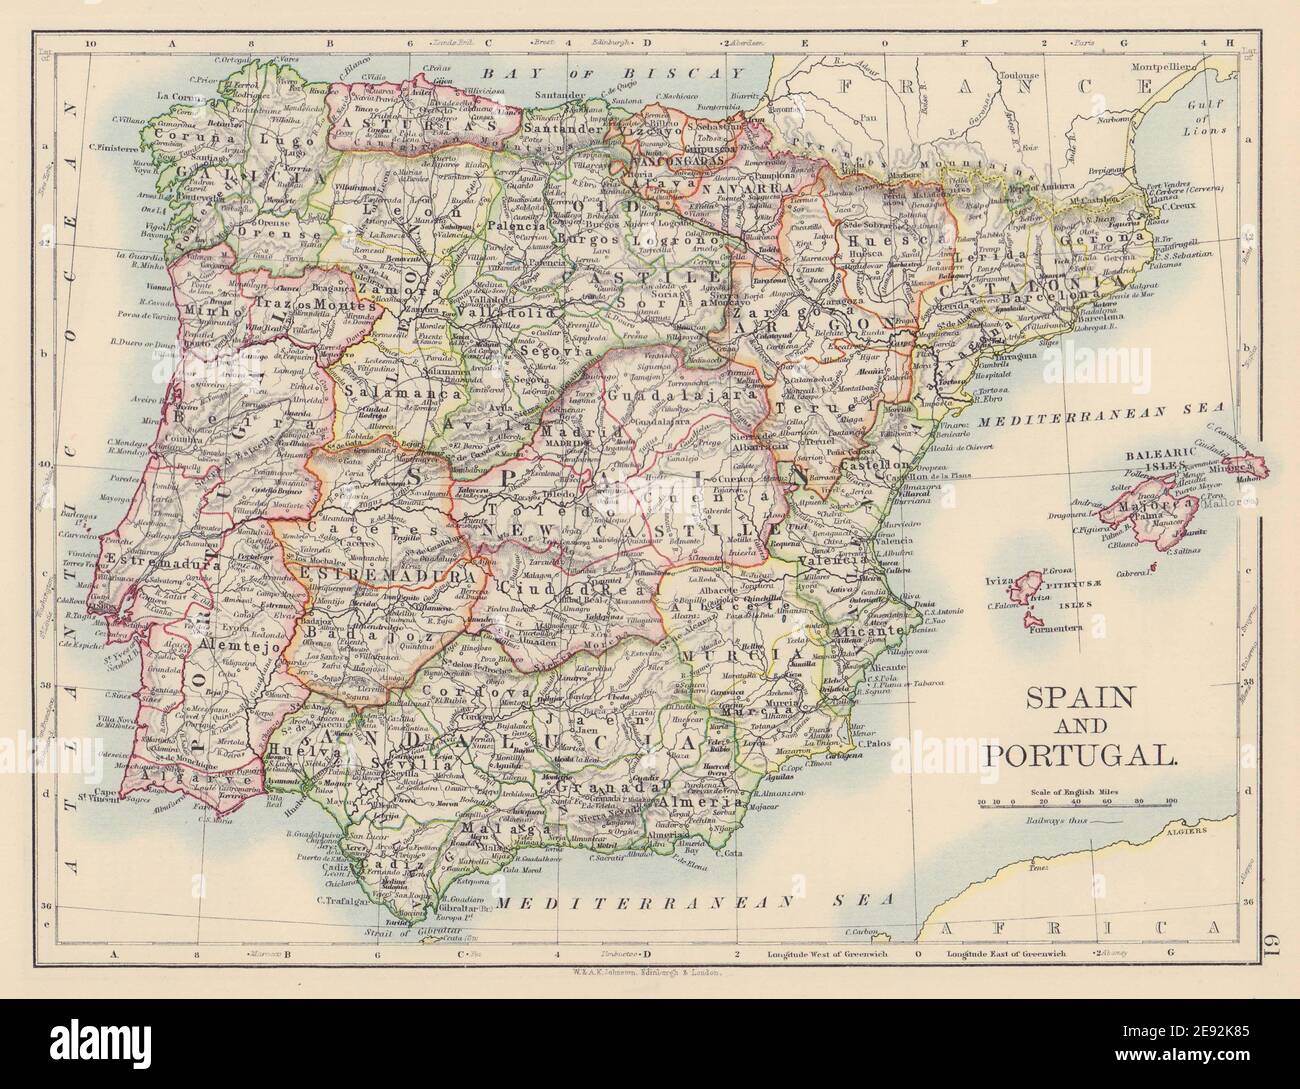 SPAIN AND PORTUGAL. Iberia. Provinces railways. Balearics. JOHNSTON 1901 map Stock Photo